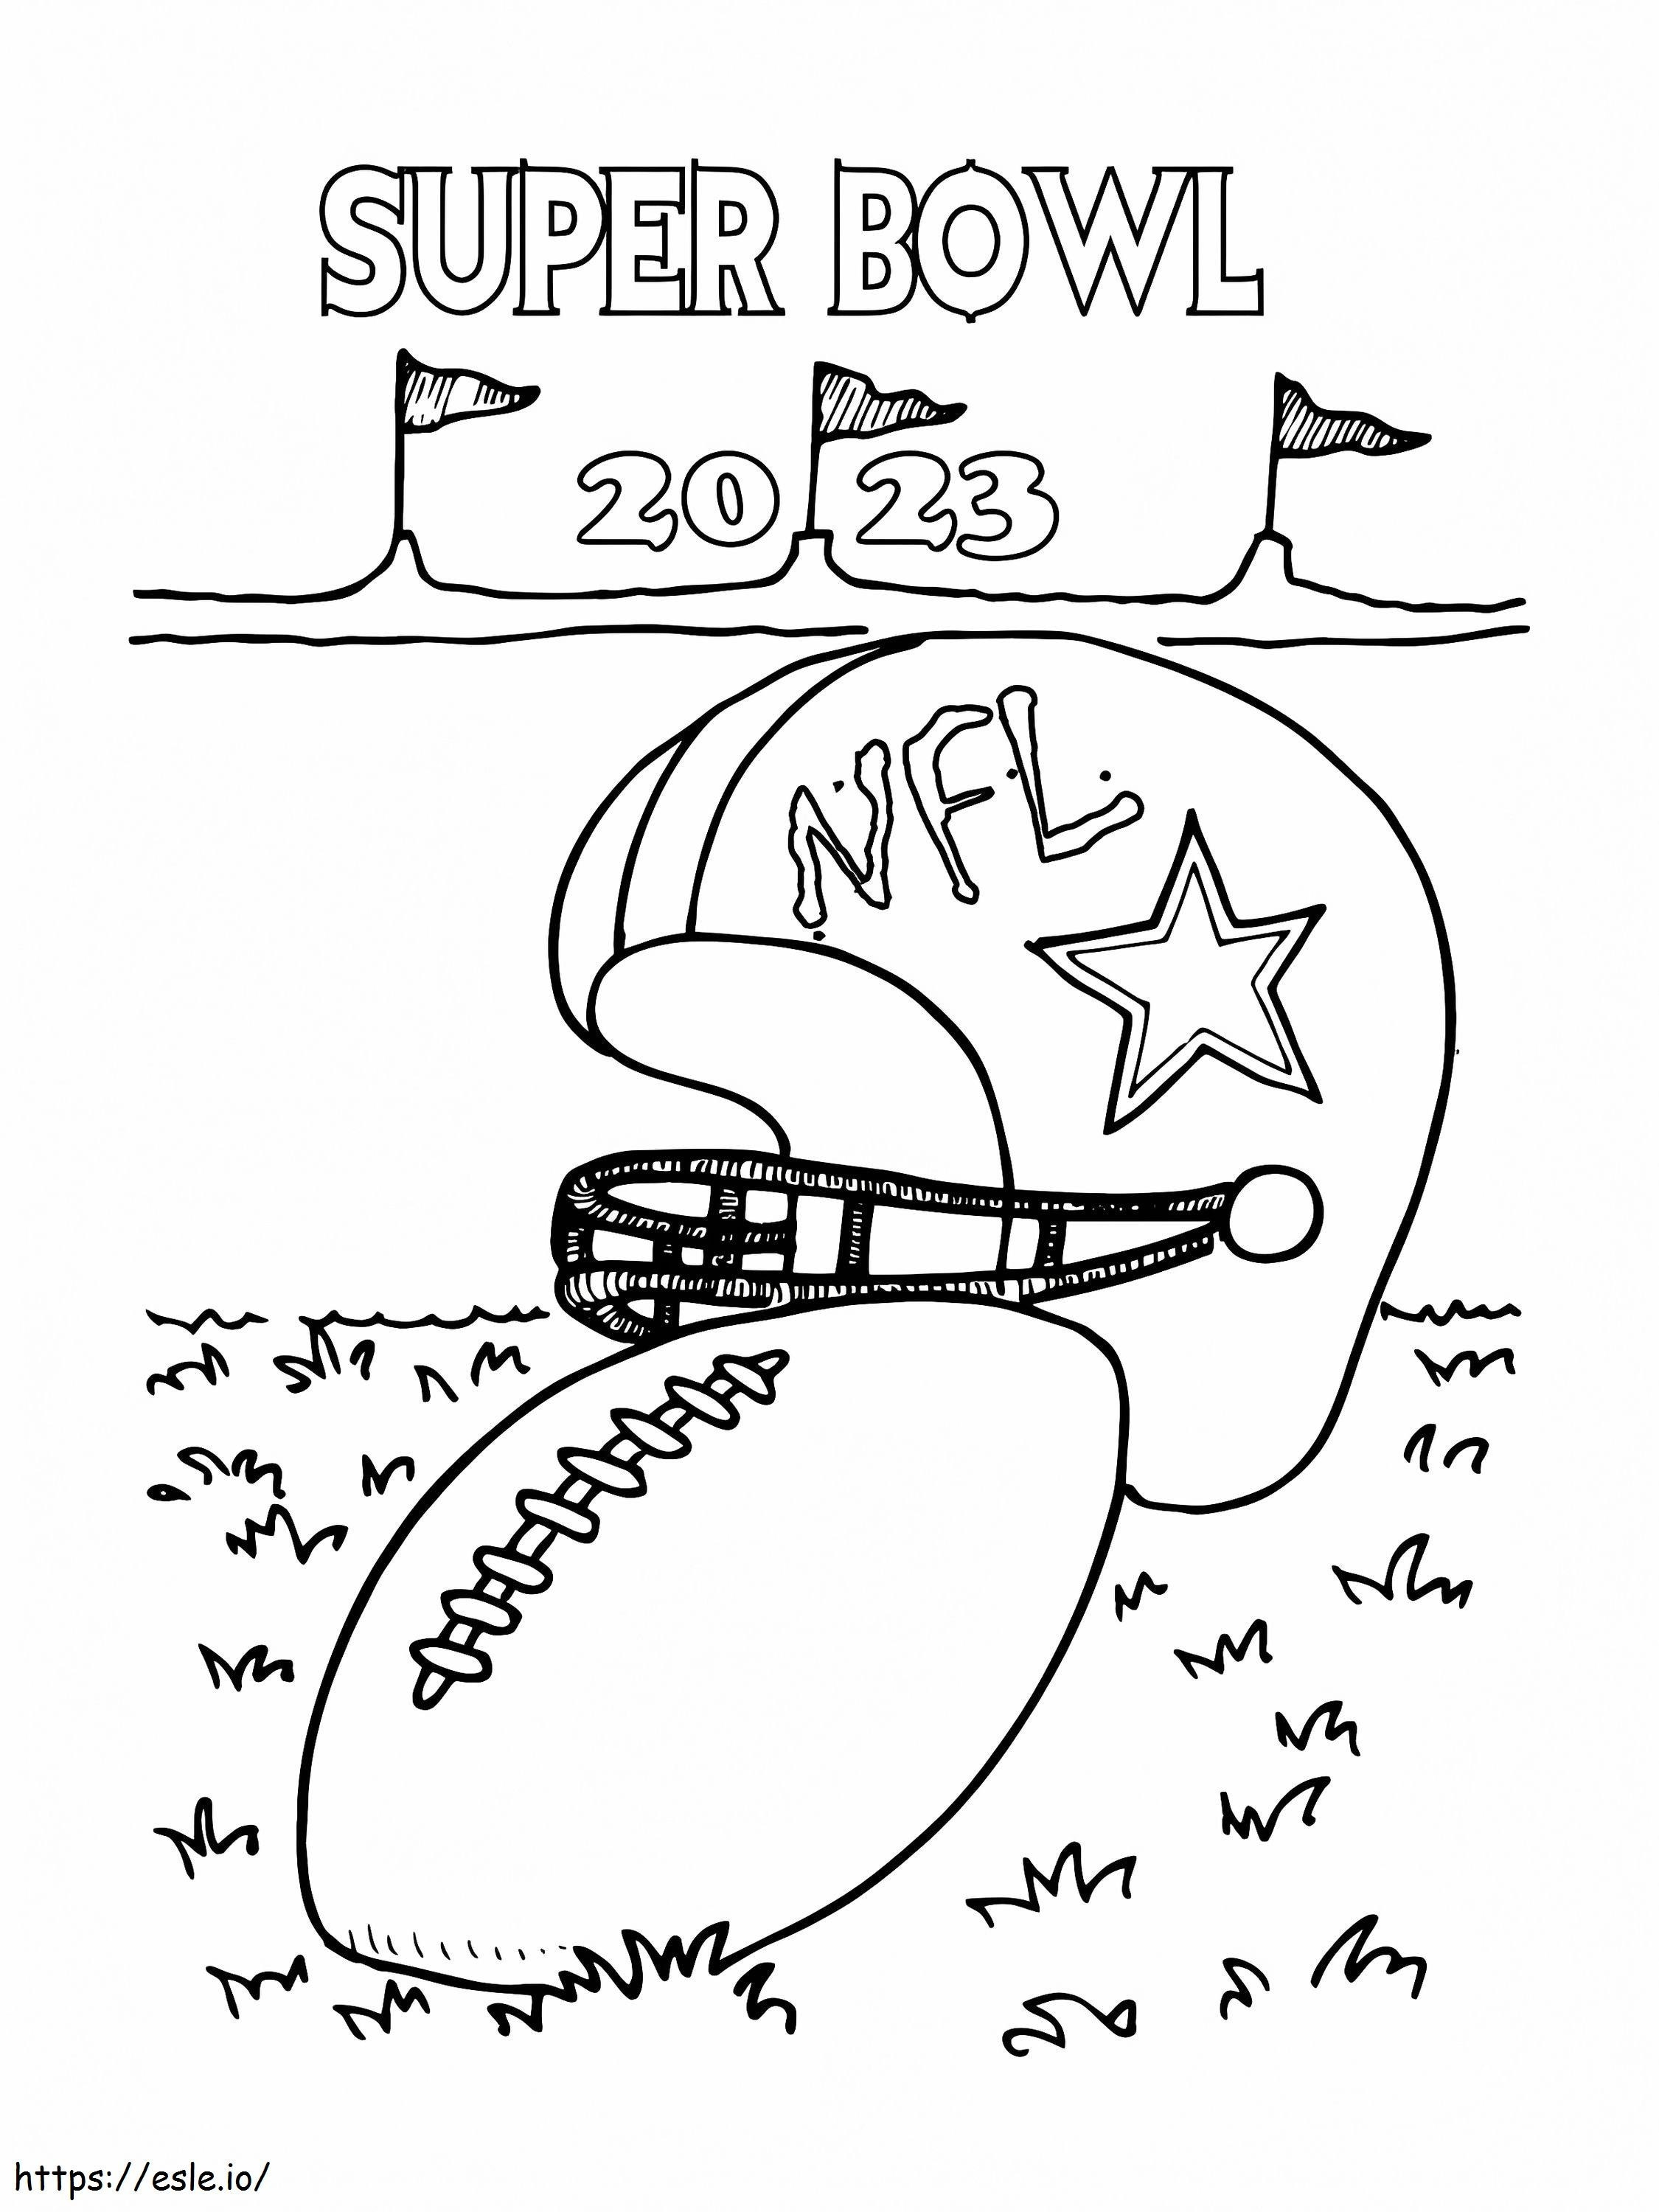 Casco y pelota del Super Bowl para colorear